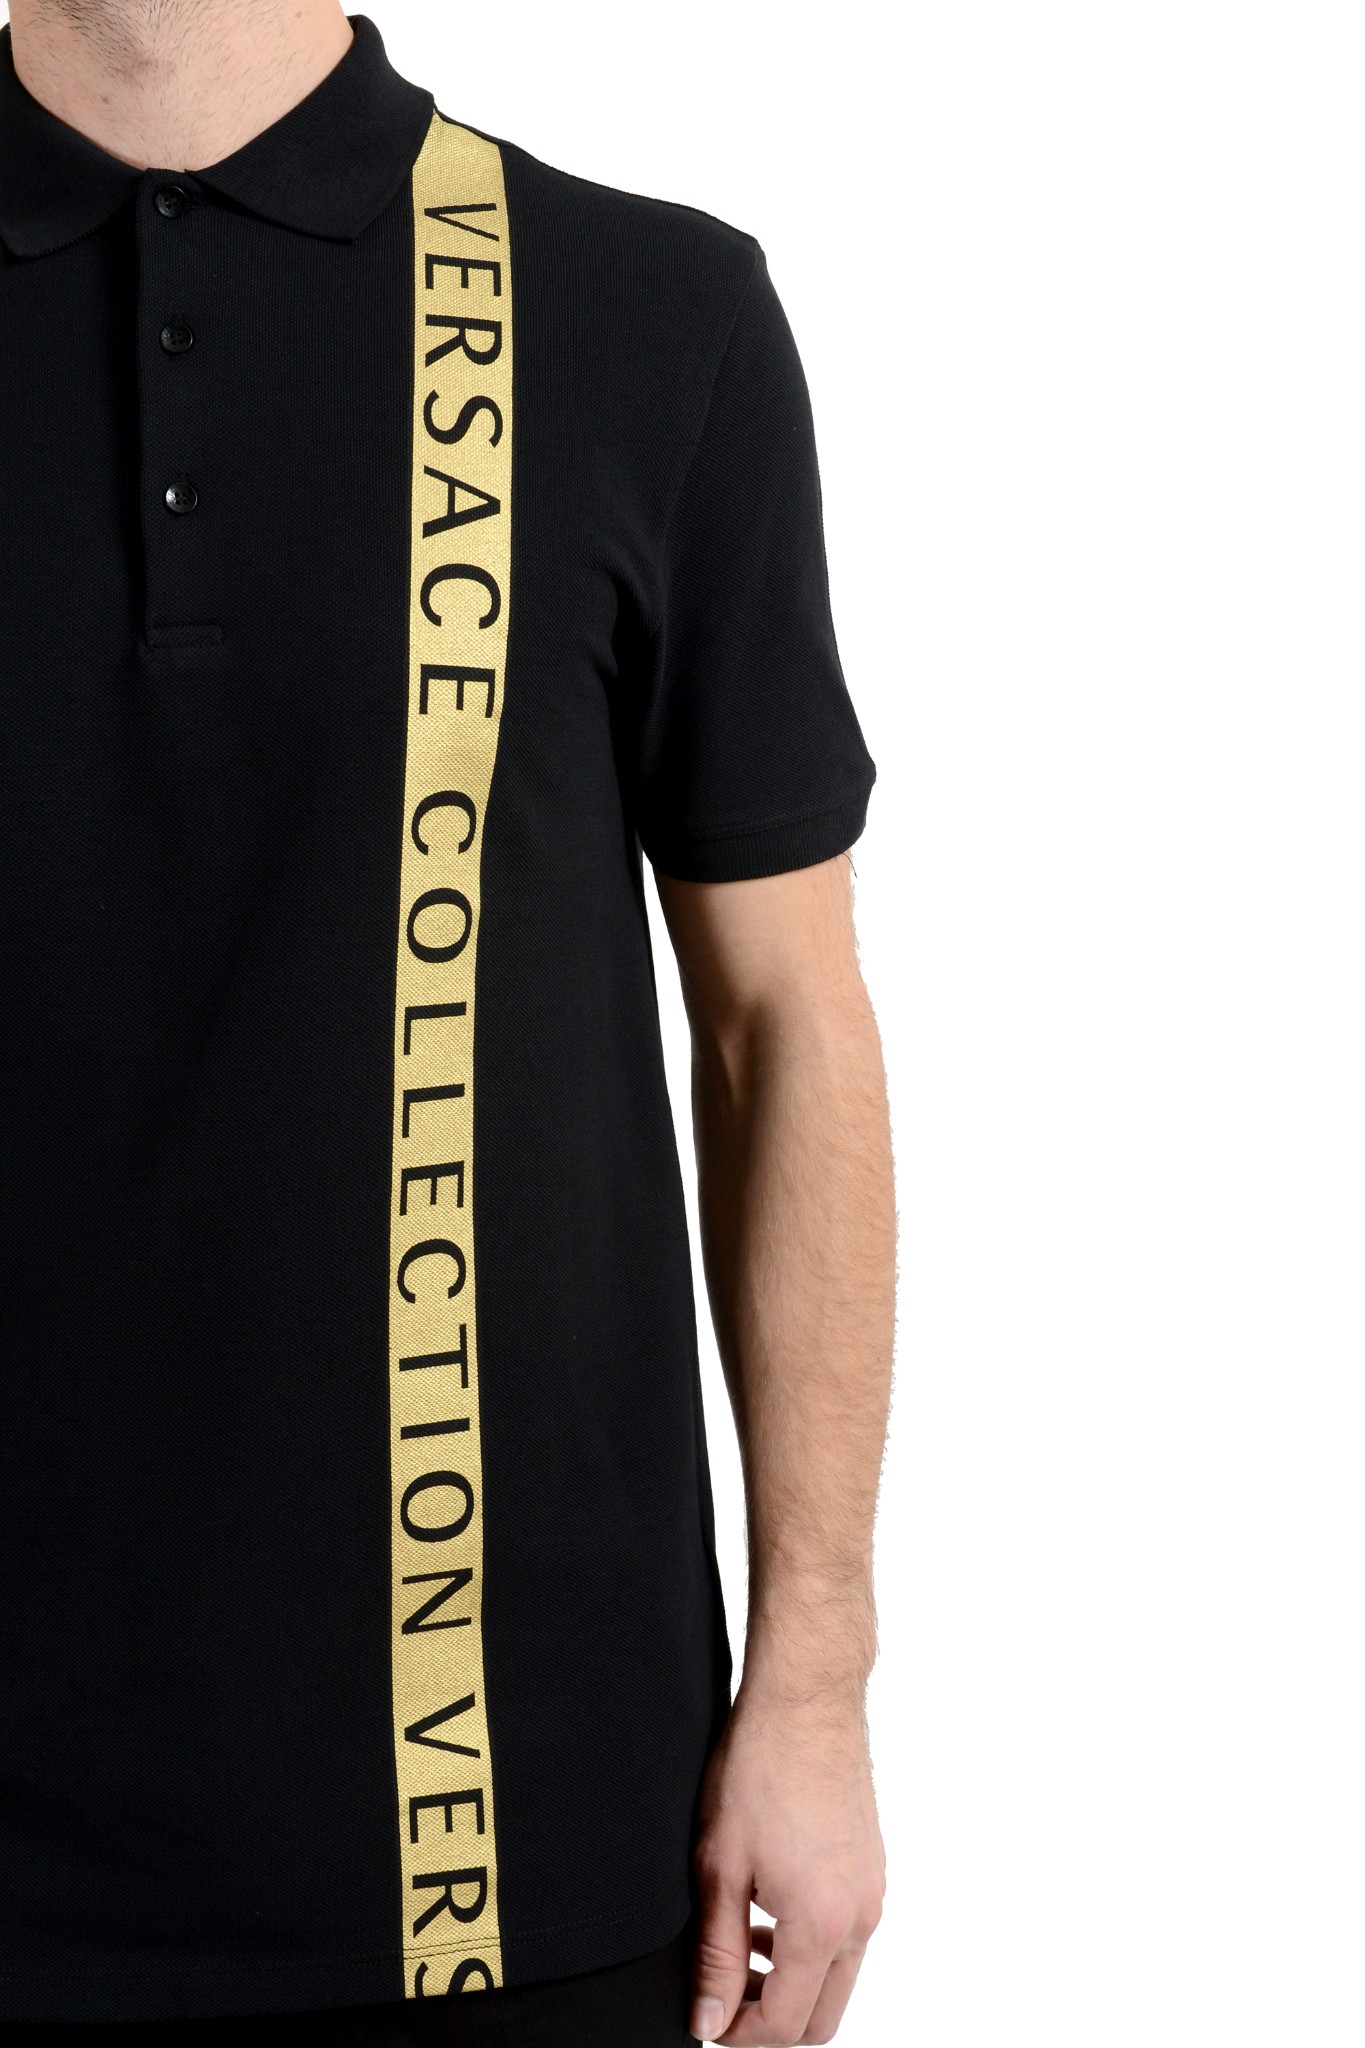 versace collection men's shirt